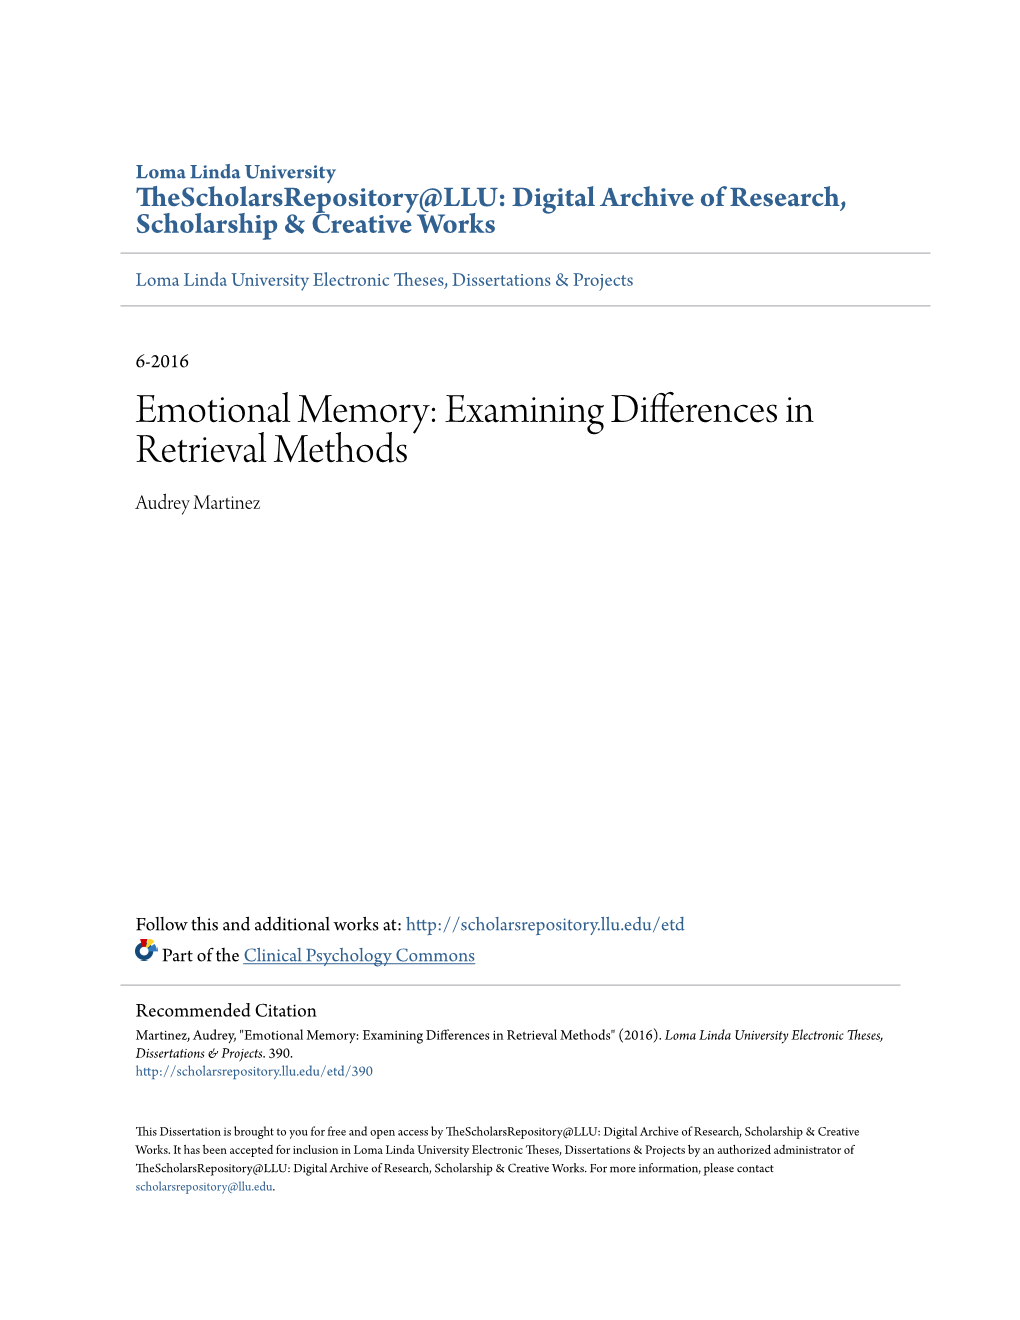 Emotional Memory: Examining Differences in Retrieval Methods Audrey Martinez